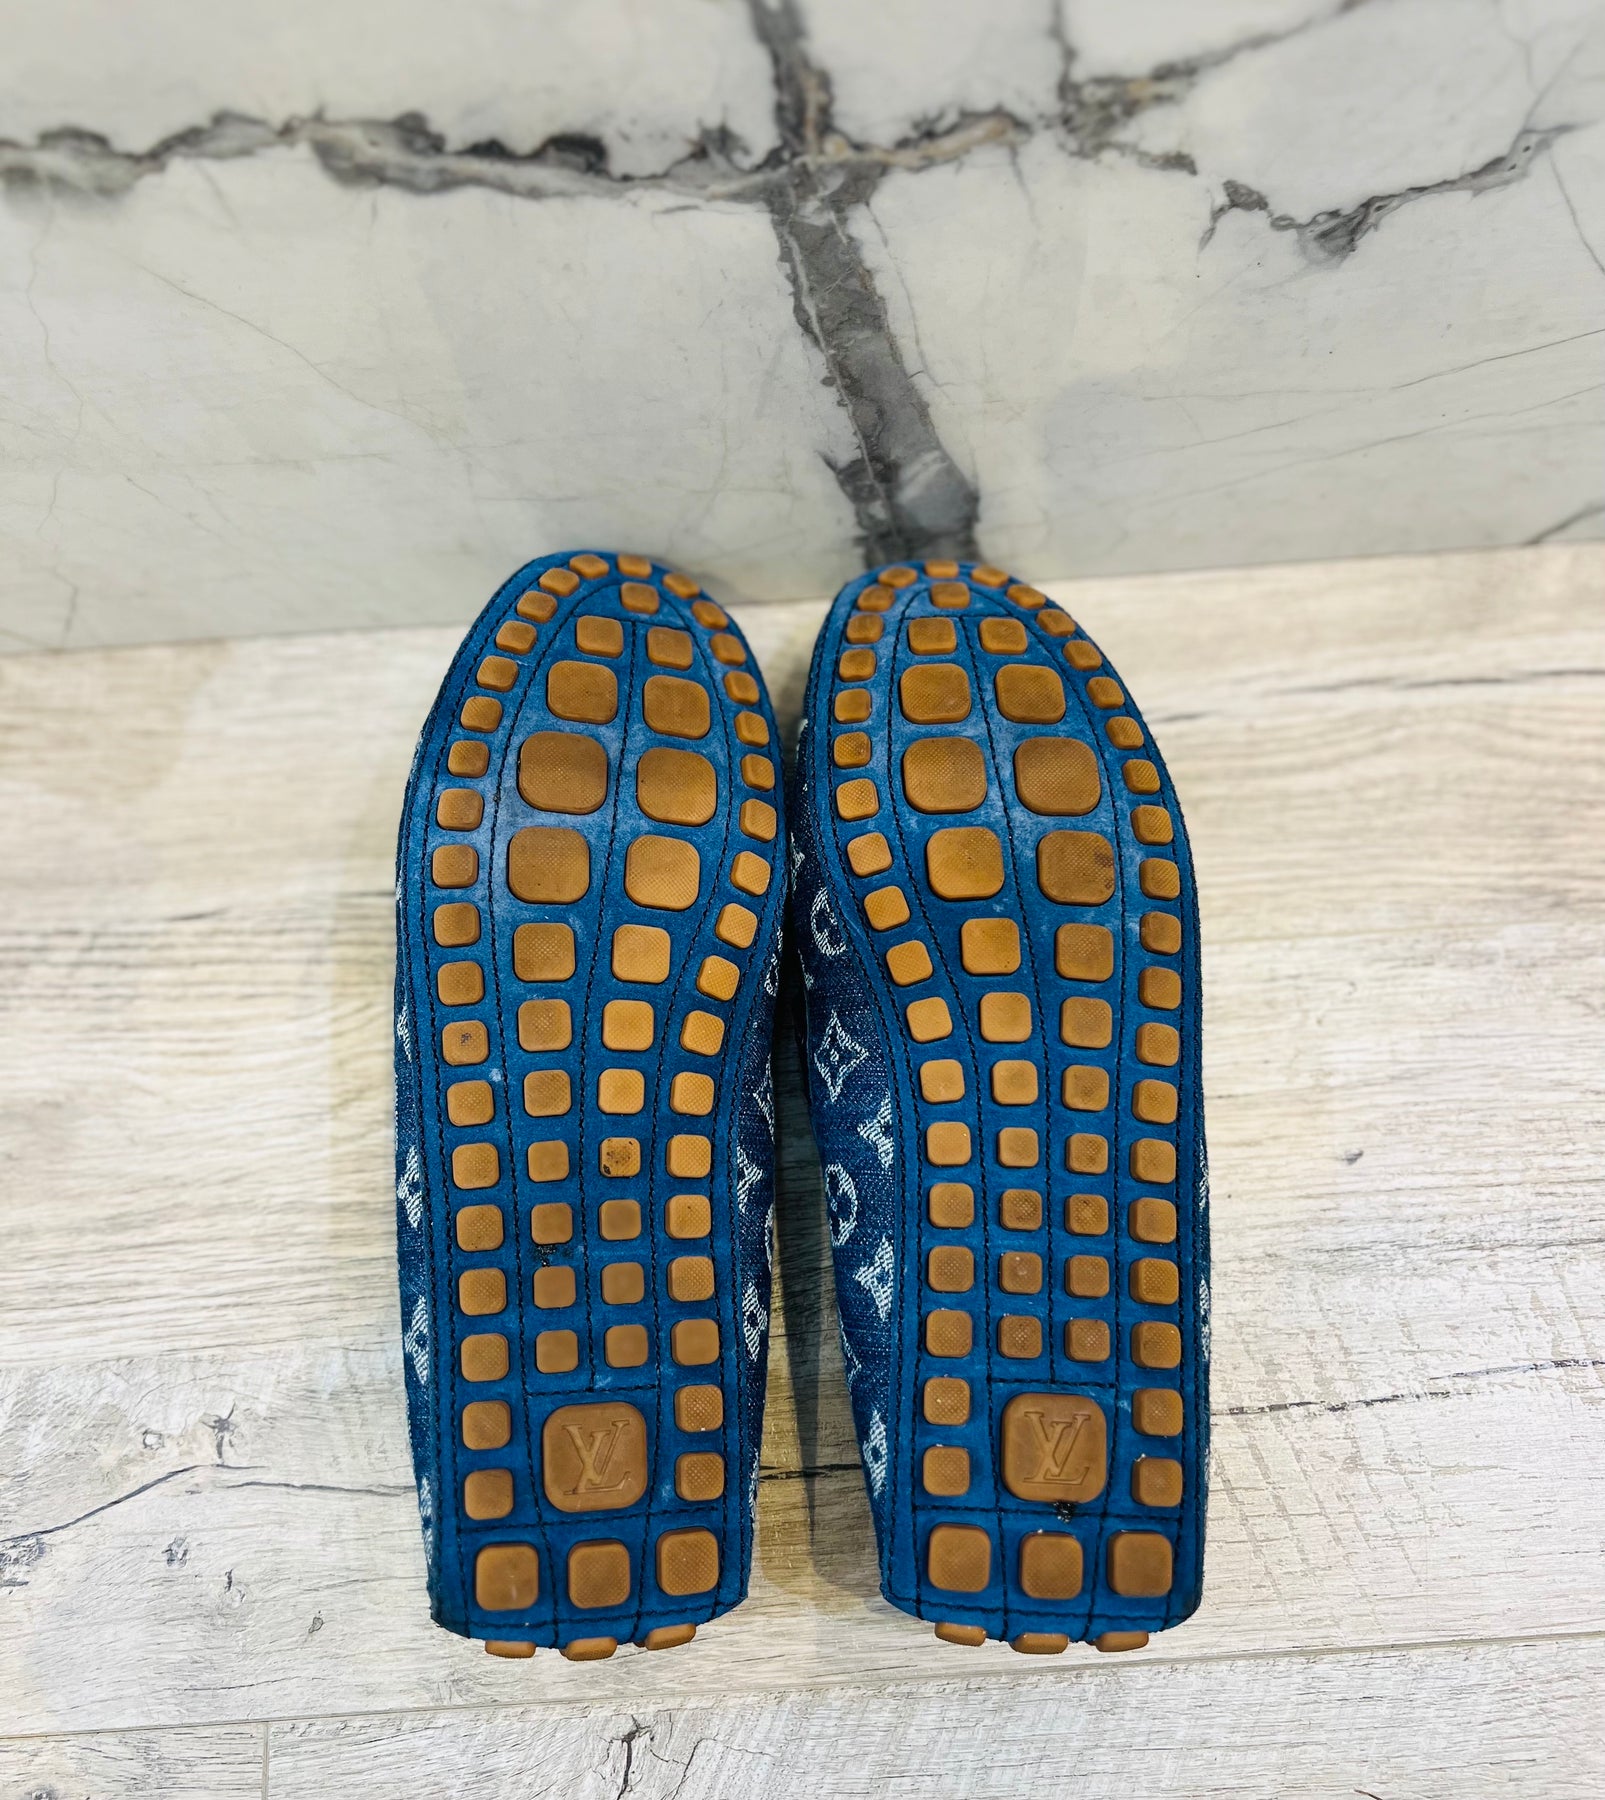 LOUIS VUITTON Monogram Denim Mens Arizona Car Shoe Moccasin Loafers 6.5 Blue  673508